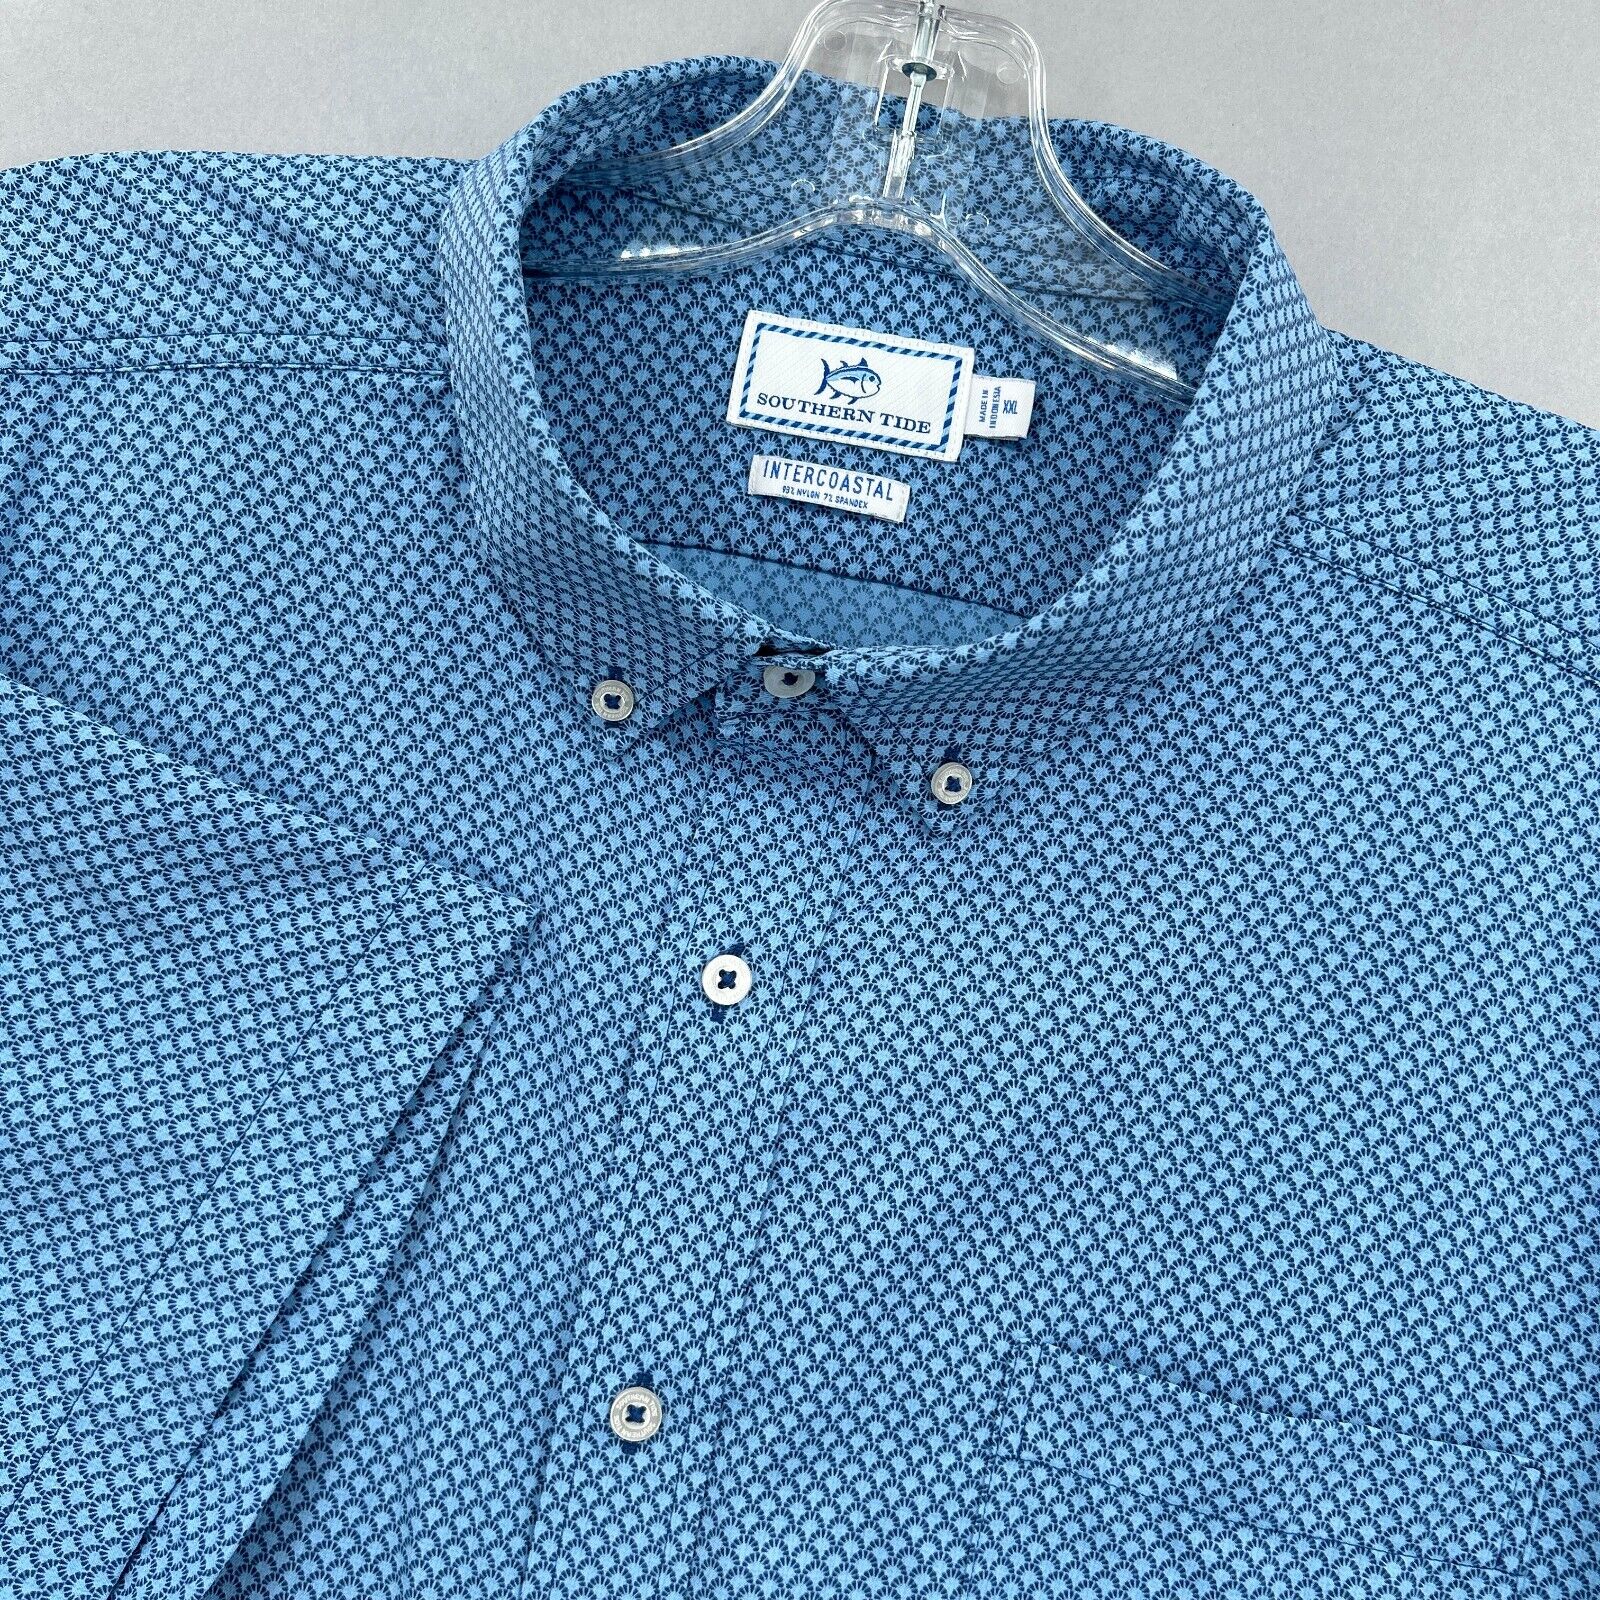 Southern Tide Shirt Mens 2XL XXL Button Up Blue Art Deco Novelty Intercoastal